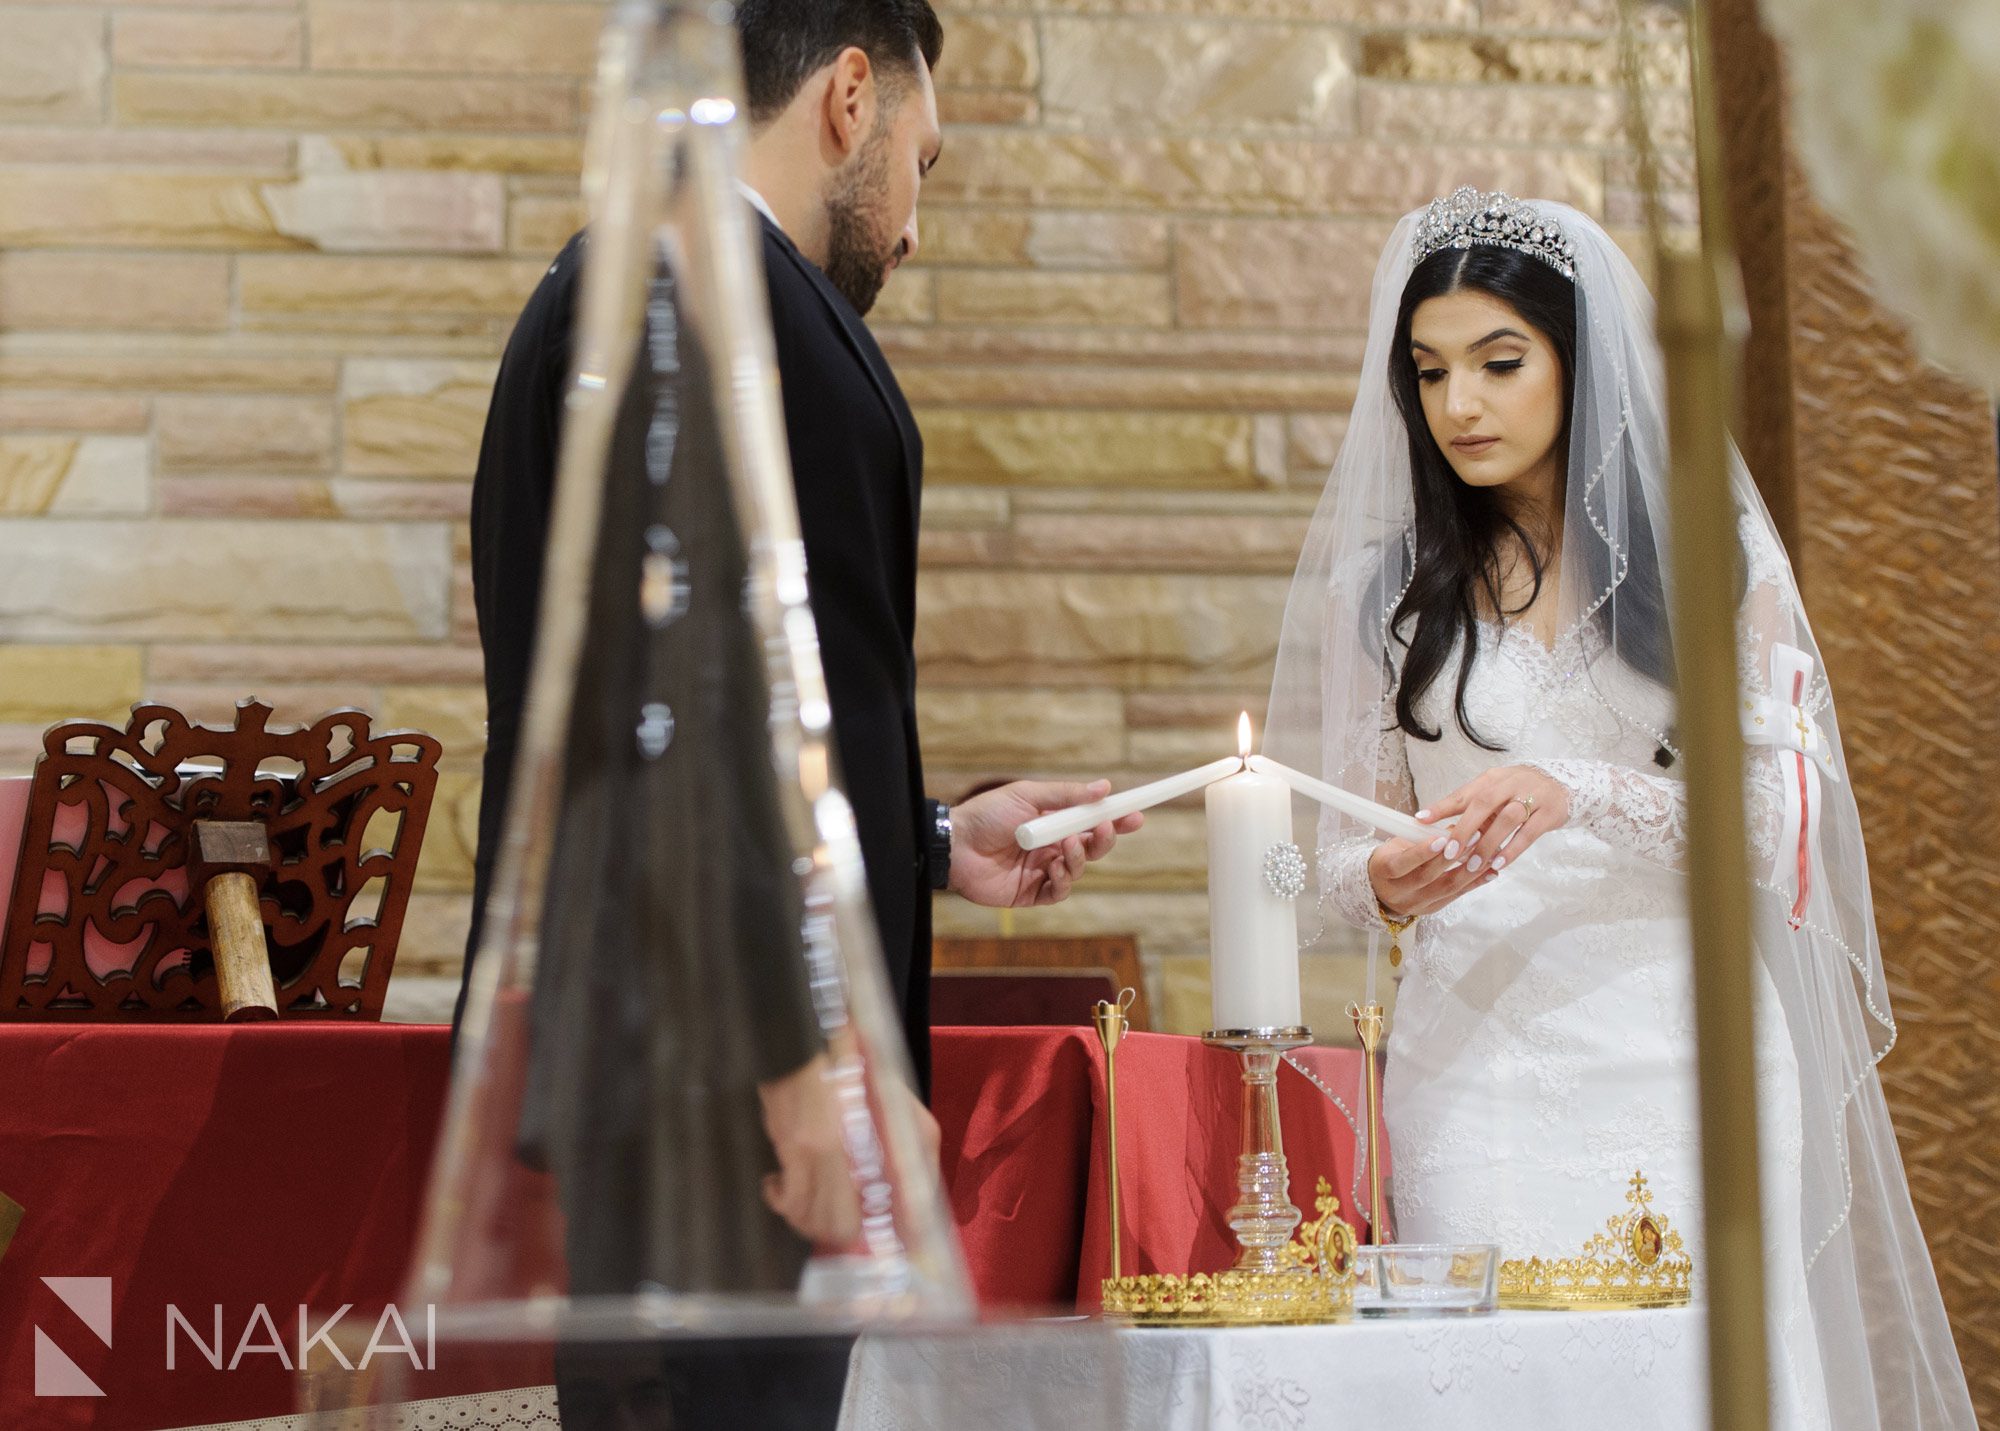 assyrian wedding traditions ceremony photos 